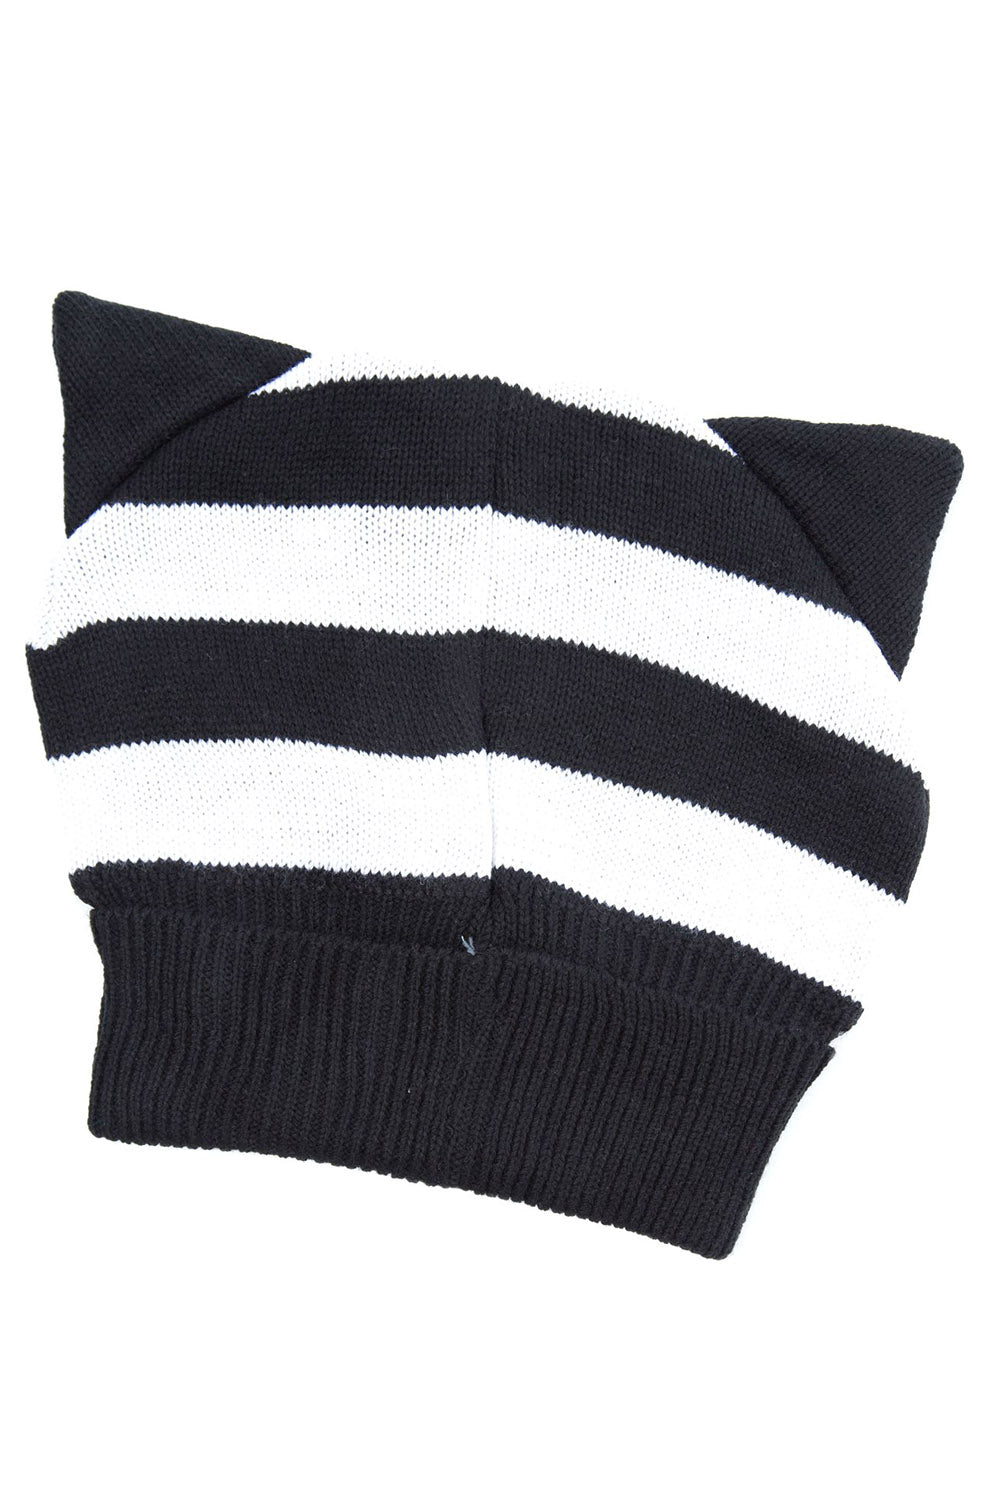 Heartless Kitty Beanie Hat [Black/White]